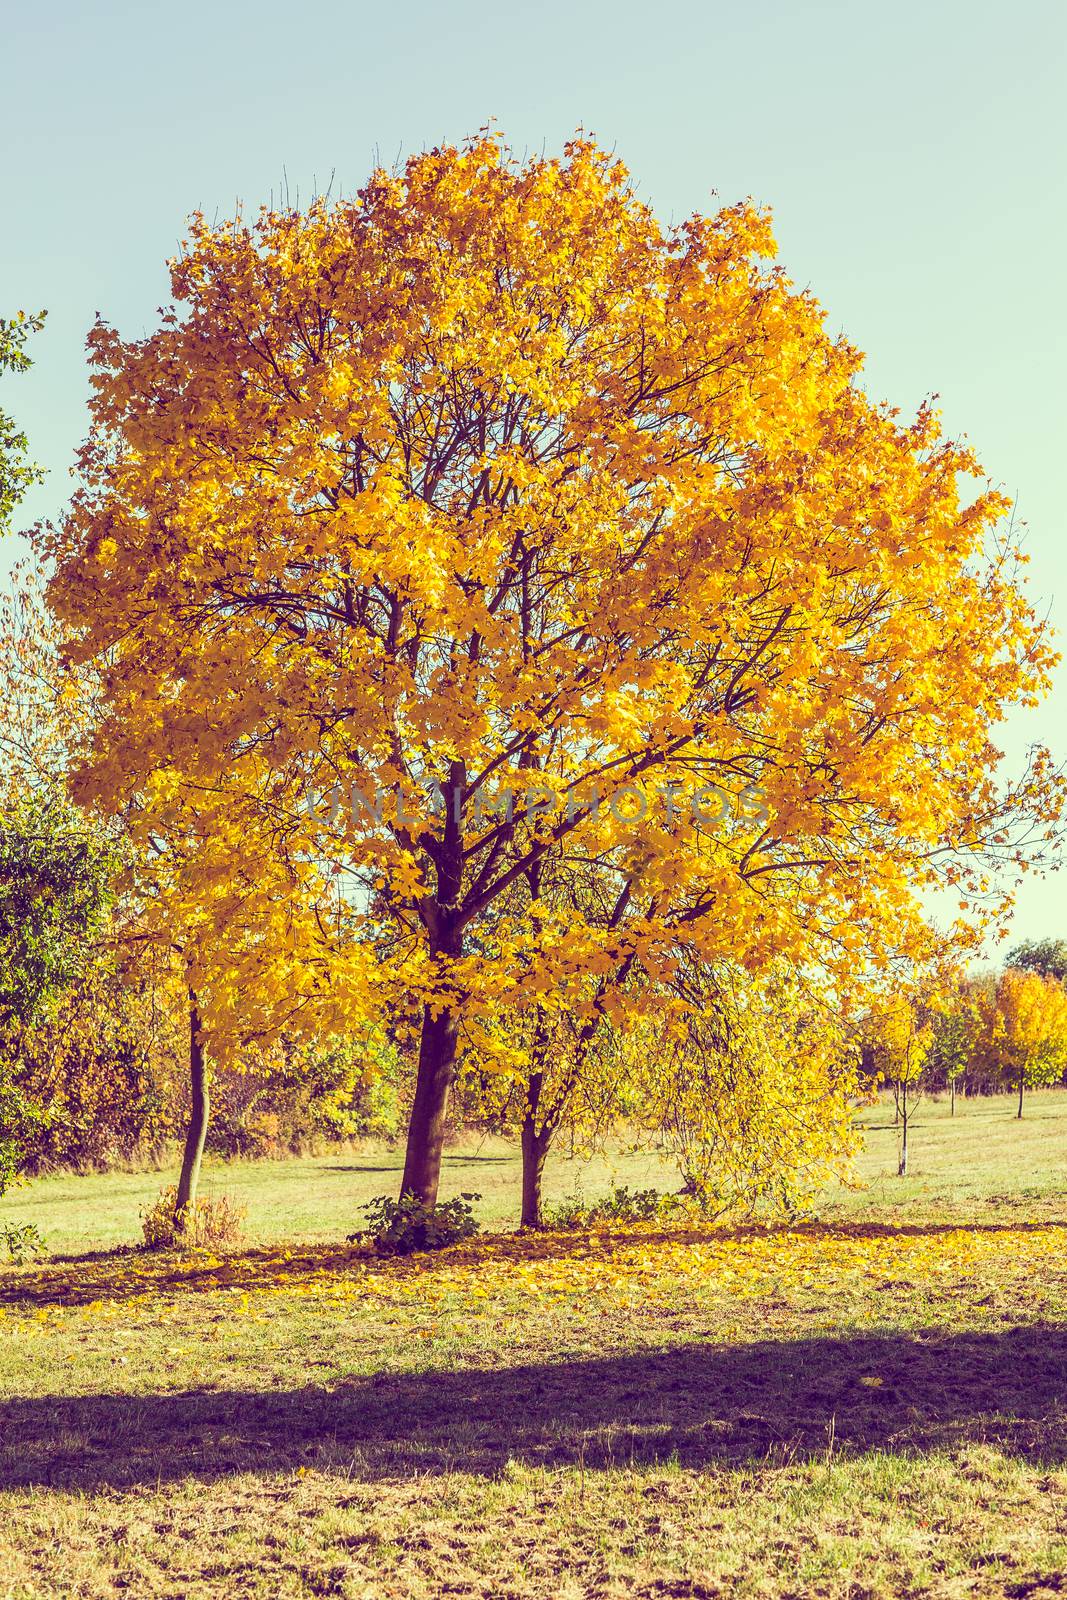 autumn outdoor nature scene with yellow tree